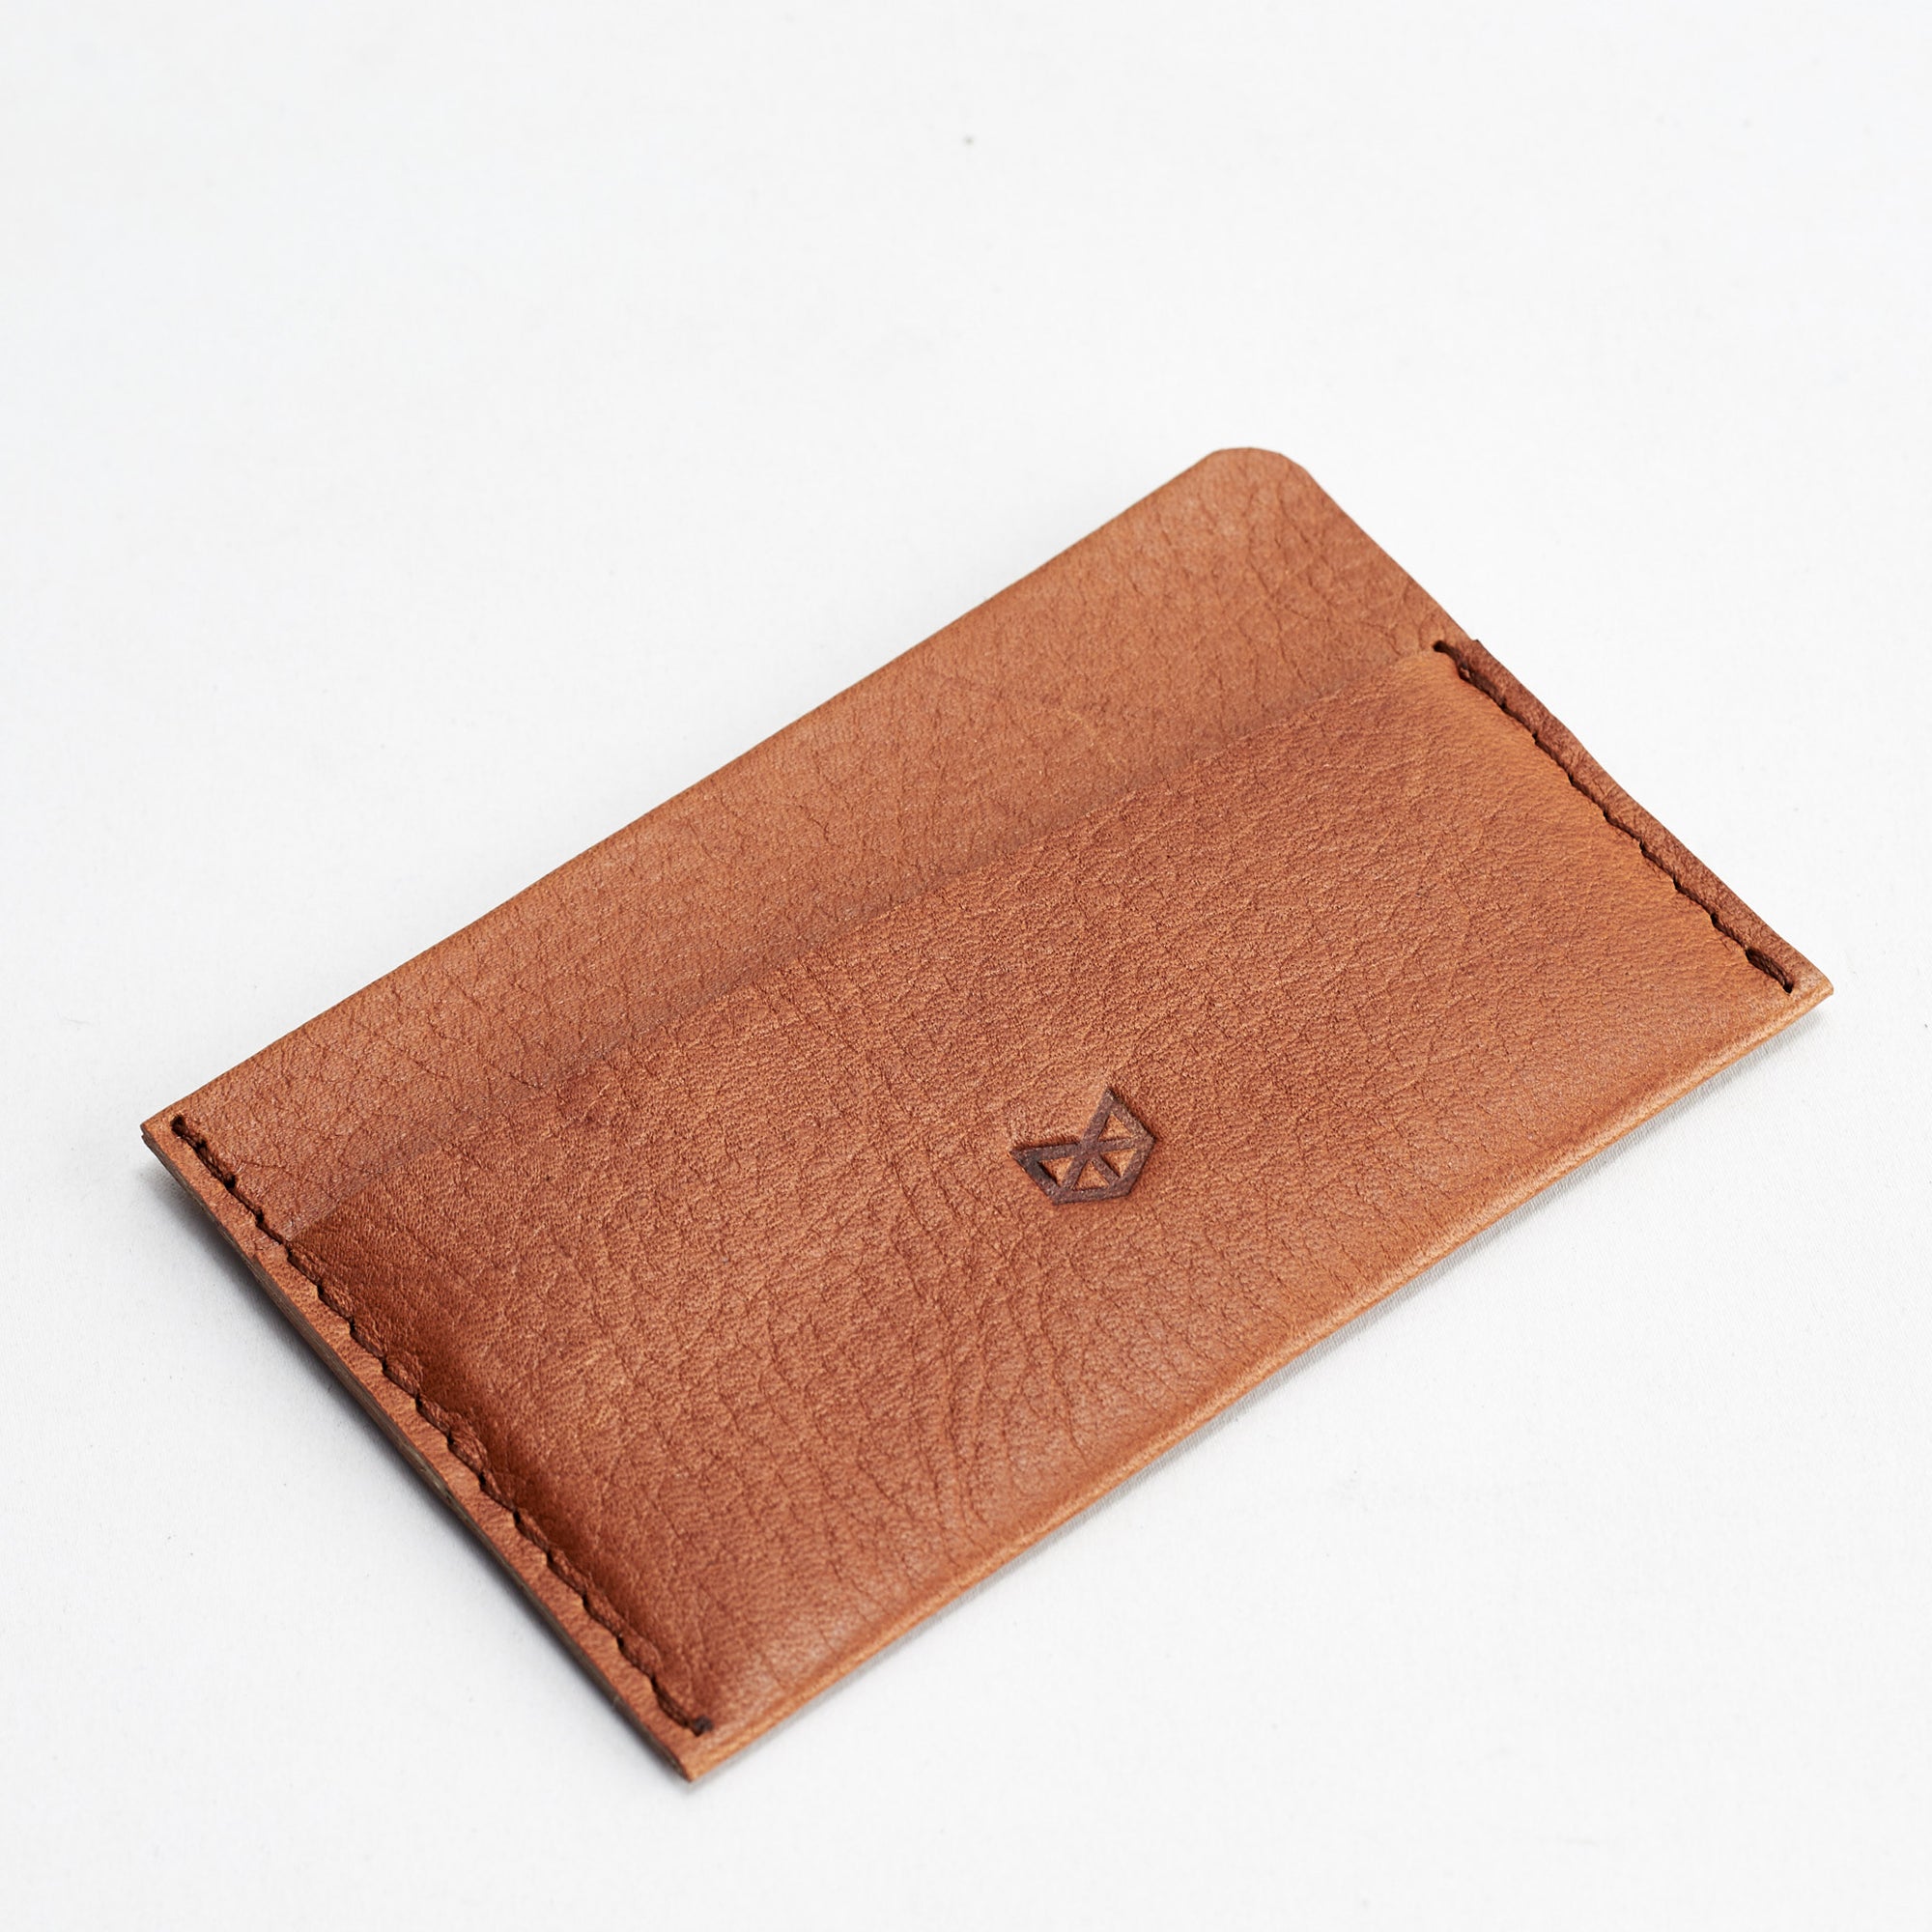 Angle. Slim light brown leather card holder. Gifts for men, leather tan card holder, handmade accessories, minimalist designer cards wallet